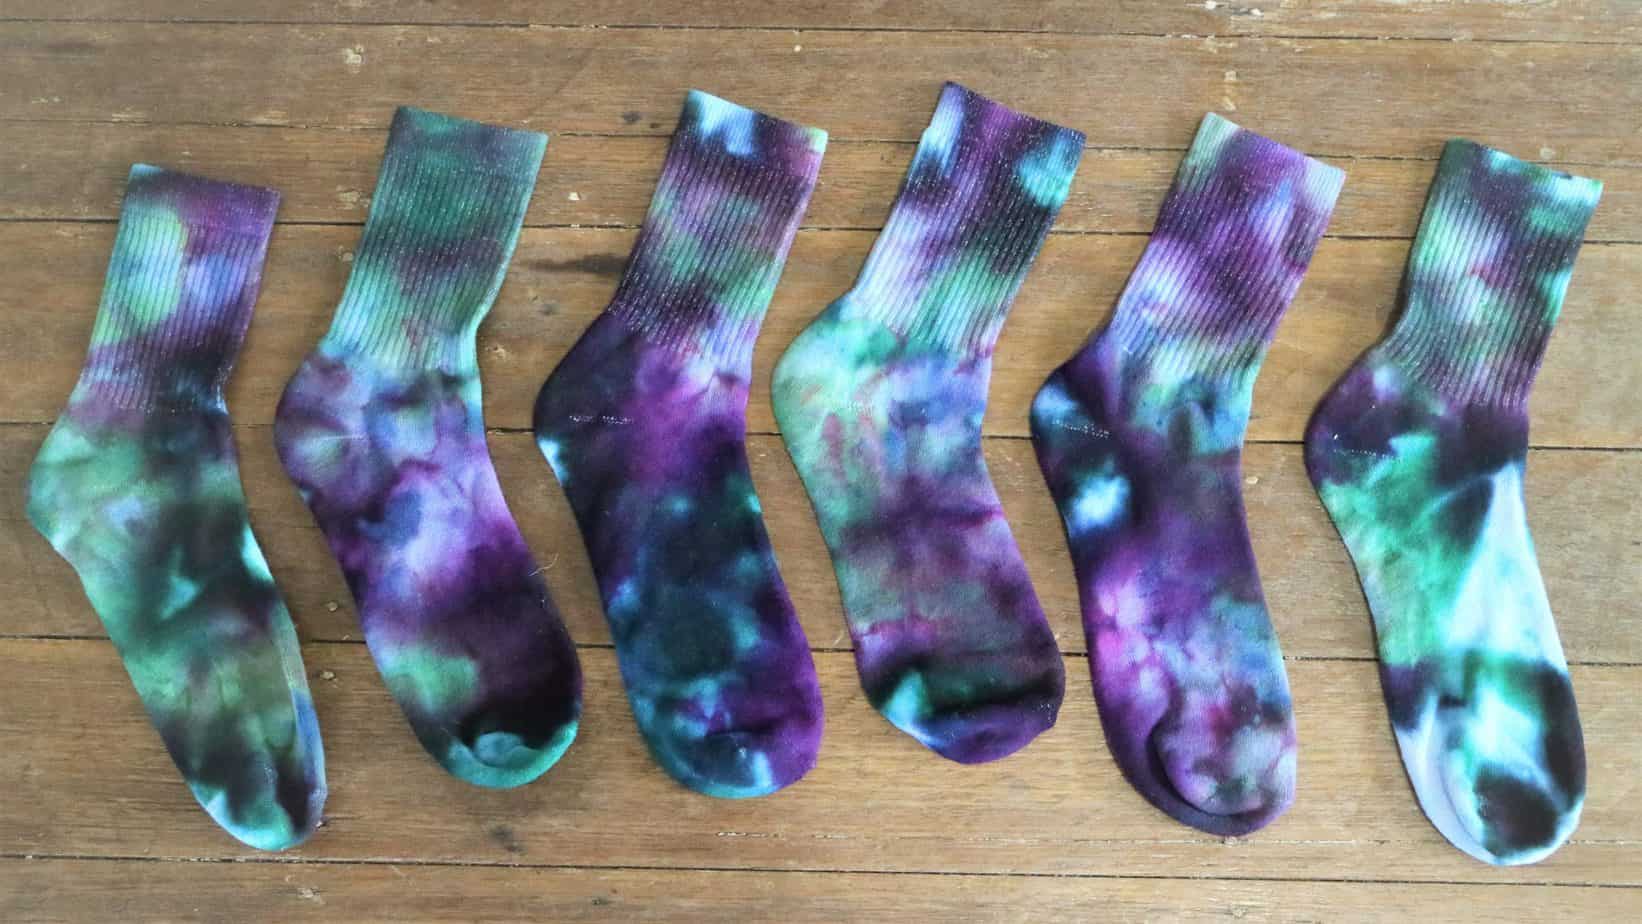 Tie-dye socks - ice-dyed purple and green crew socks